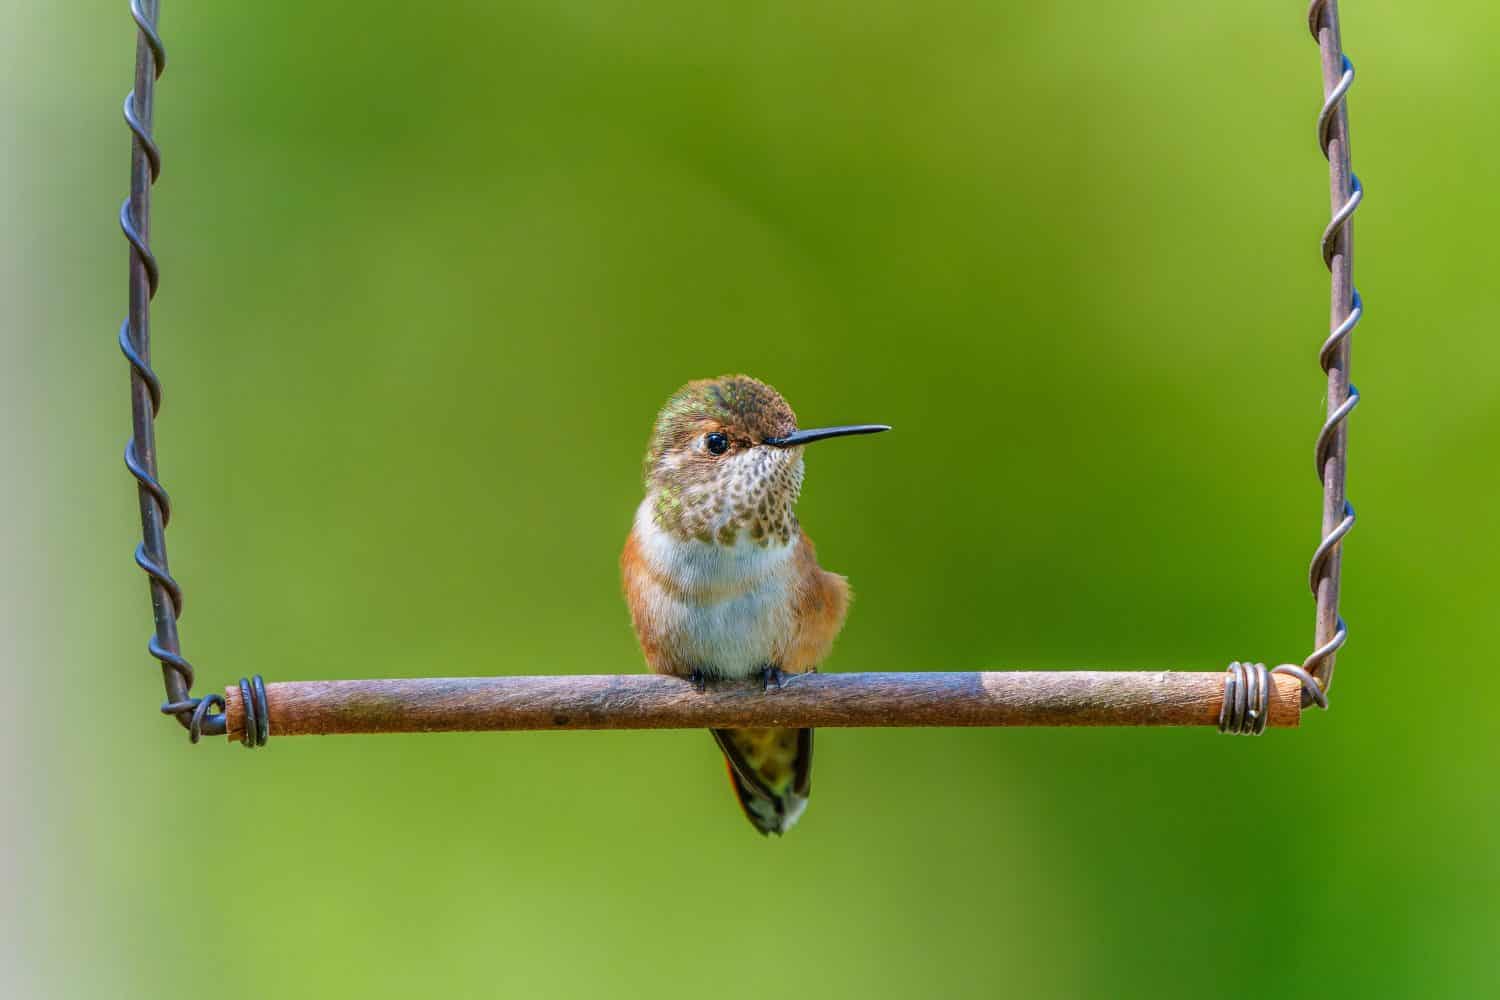 A tiny fledgling Rufous Hummingbird (Selasphorus rufus) sitting on a perch